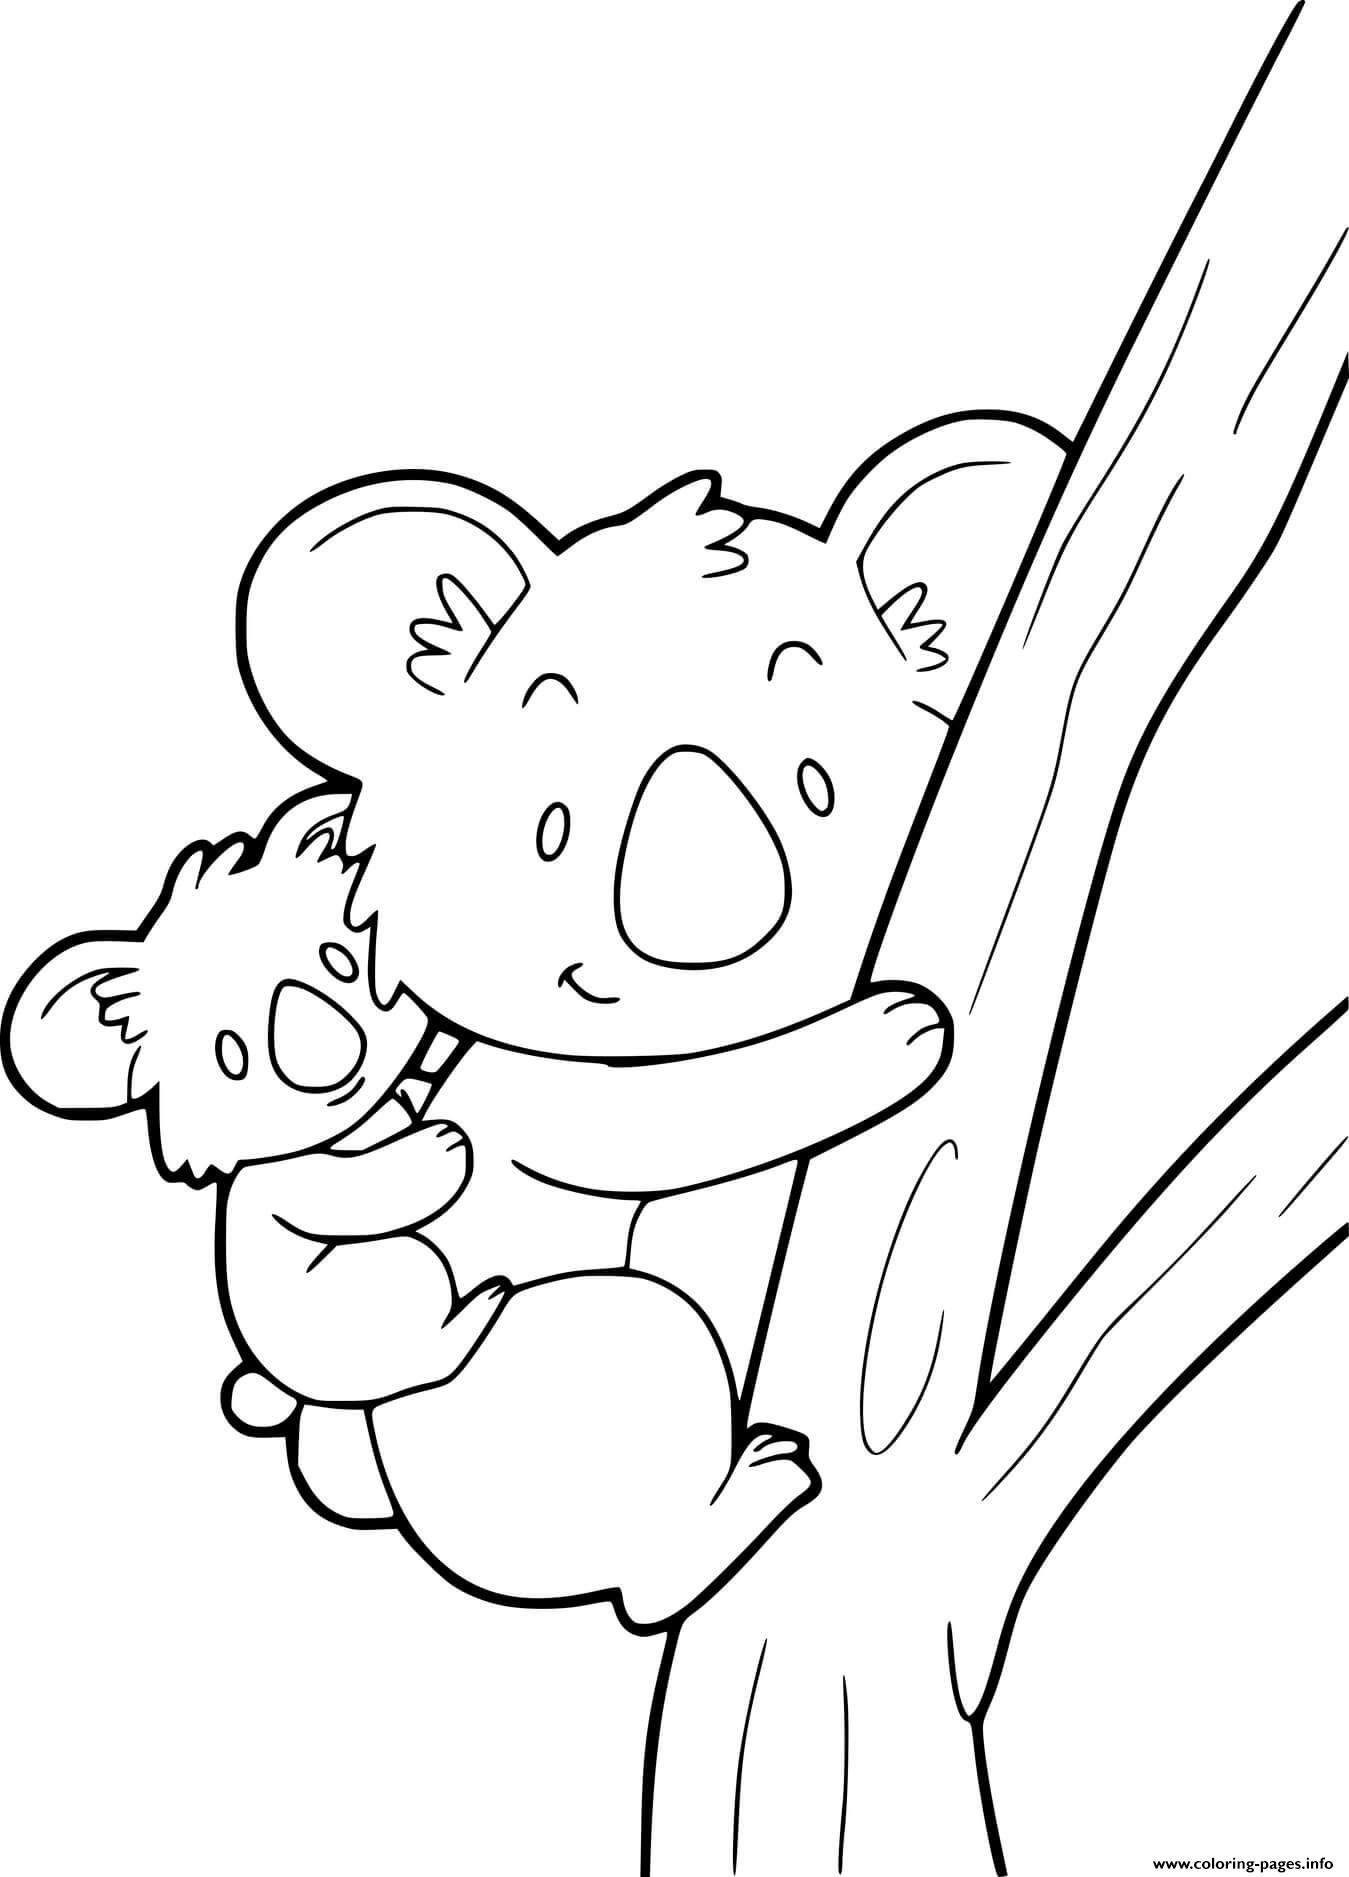 Koala Carrying Her Baby Climbing The Tree coloring